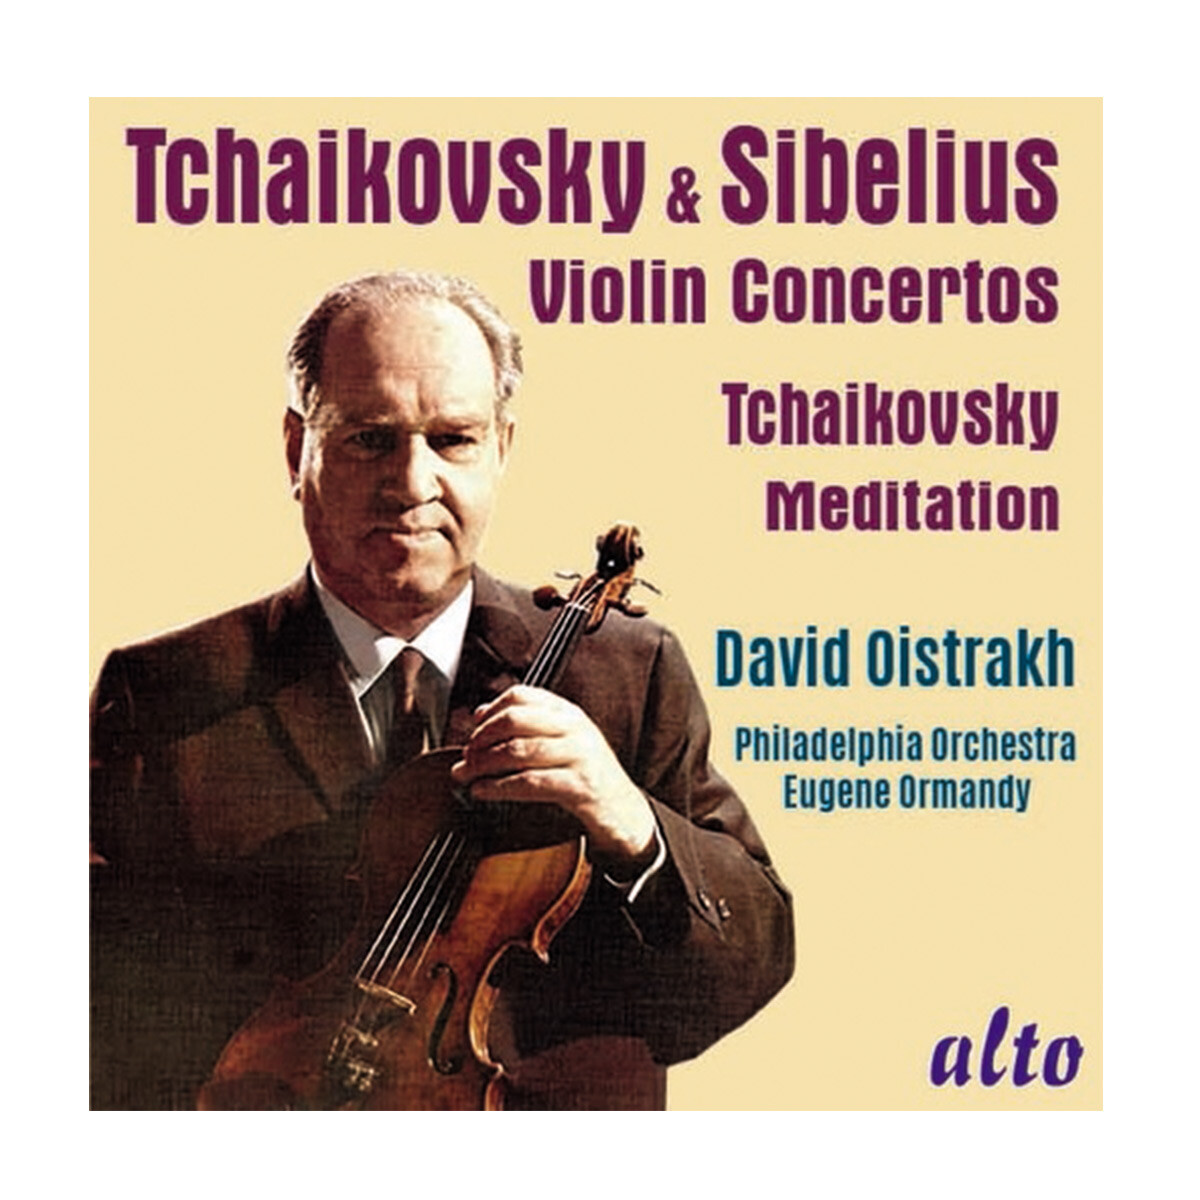 Oistrakh, David / Philadelphia Orchestra - Tchaikovsky & Sibelius Violin Concertos Meditation 